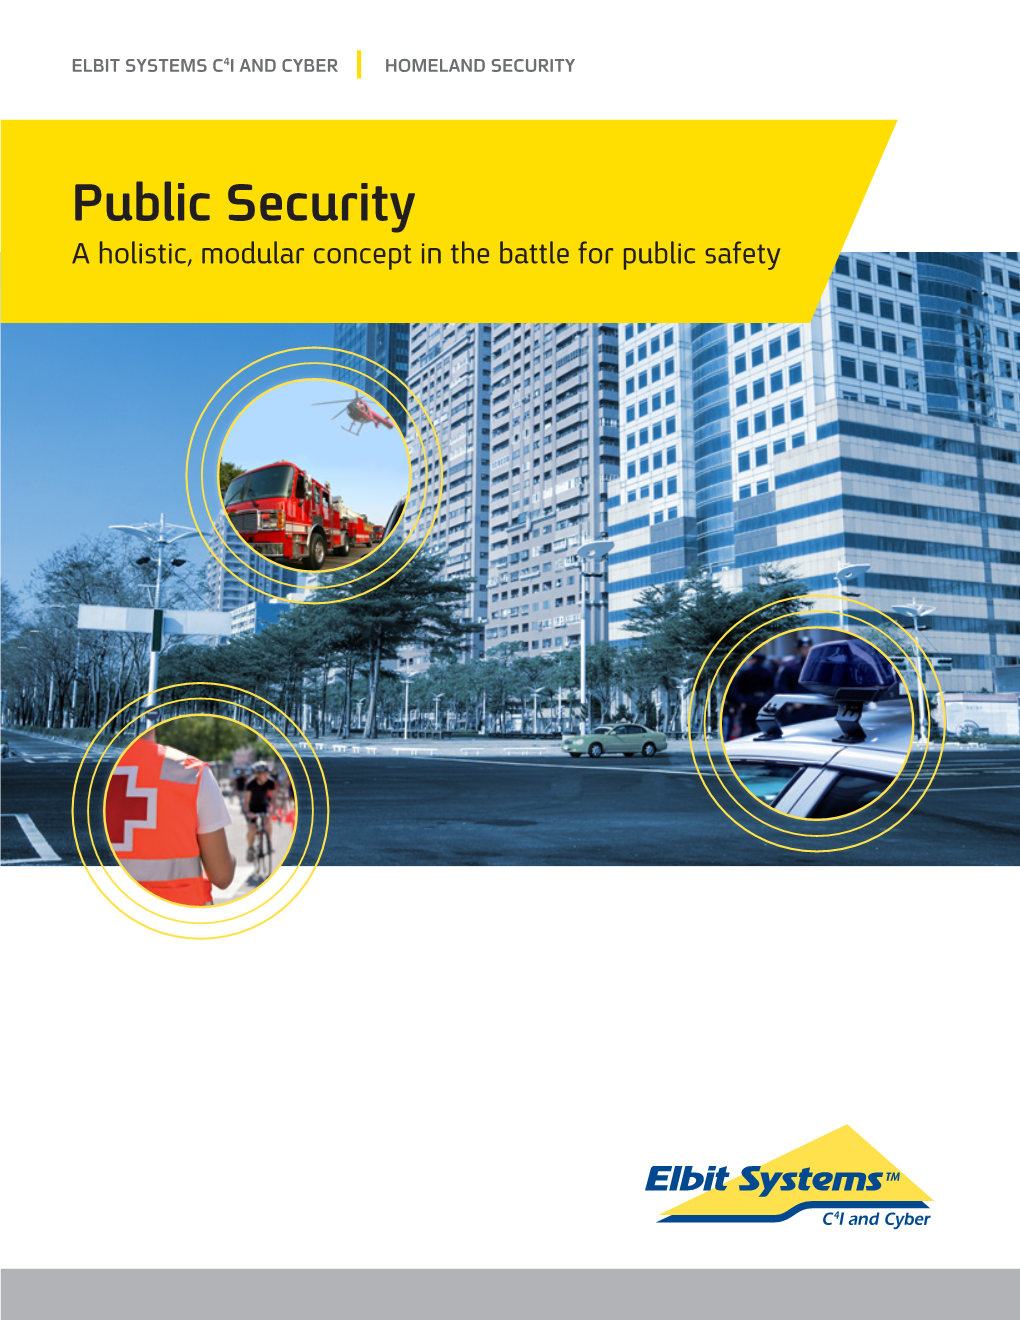 Public Security a Holistic, Modular Concept in the Battle for Public Safety Public Security a Holistic, Modular Concept in the Battle for Public Safety